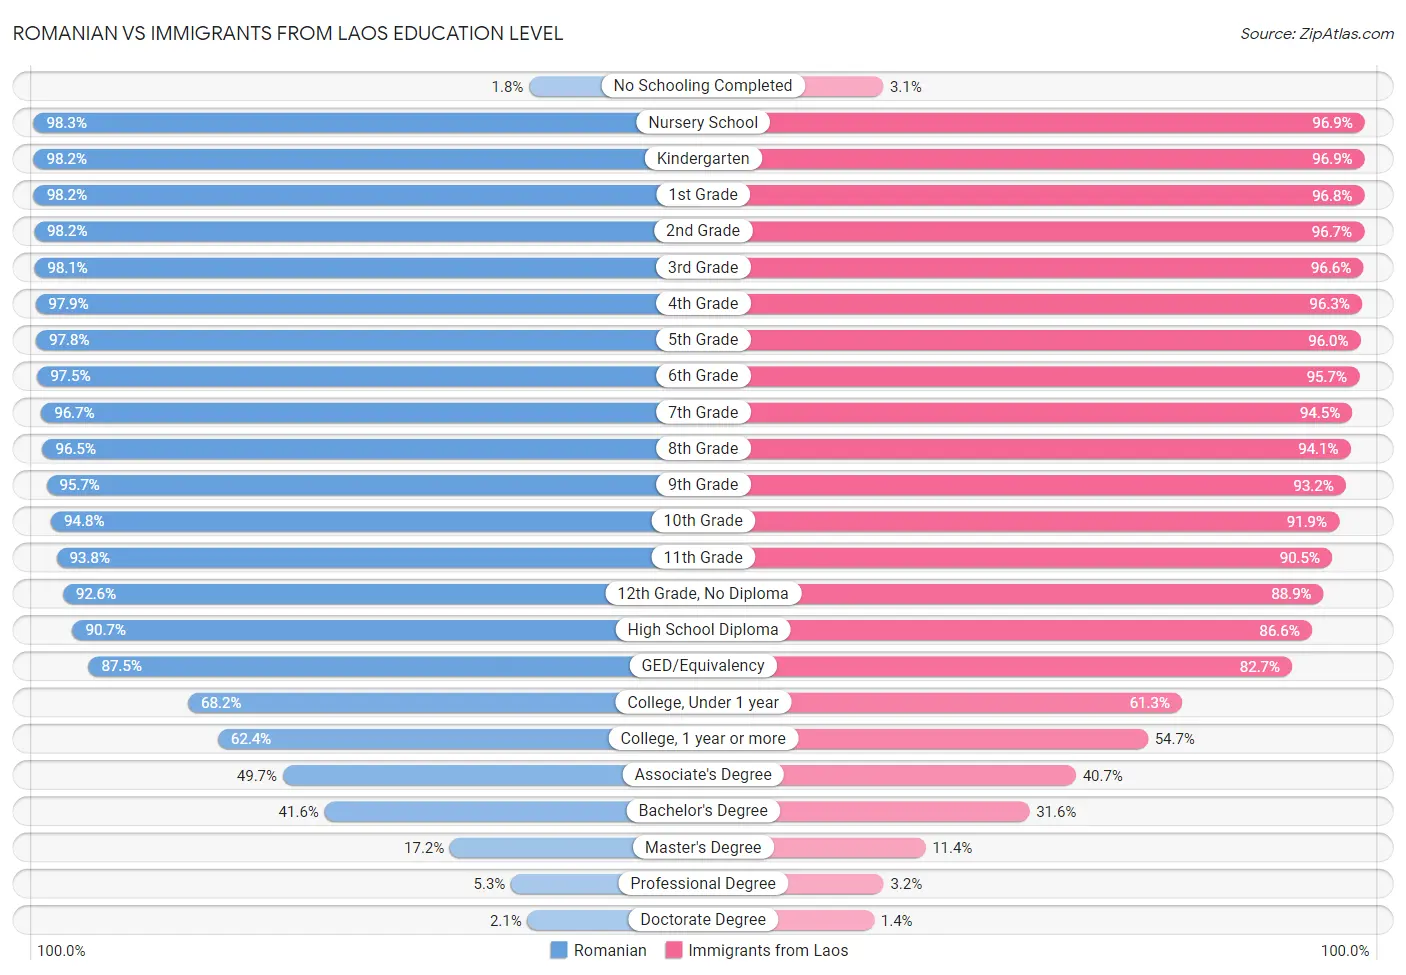 Romanian vs Immigrants from Laos Education Level